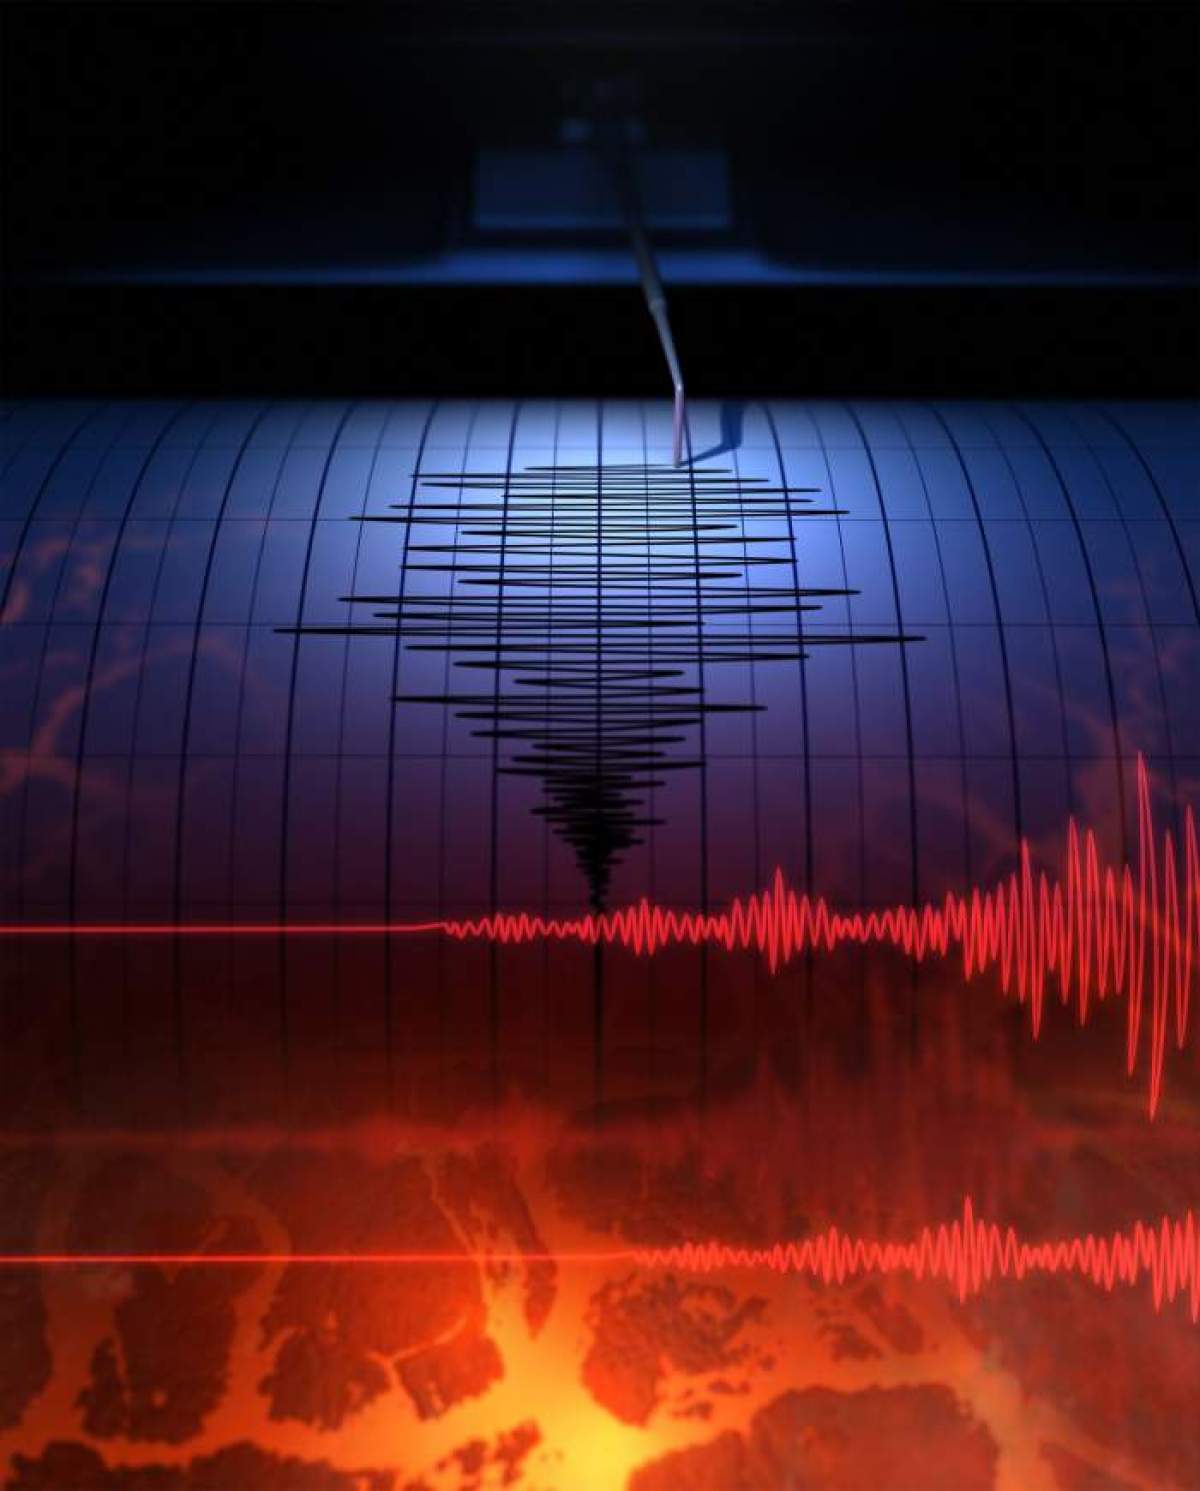 reprezentare grafica a unui cutremur